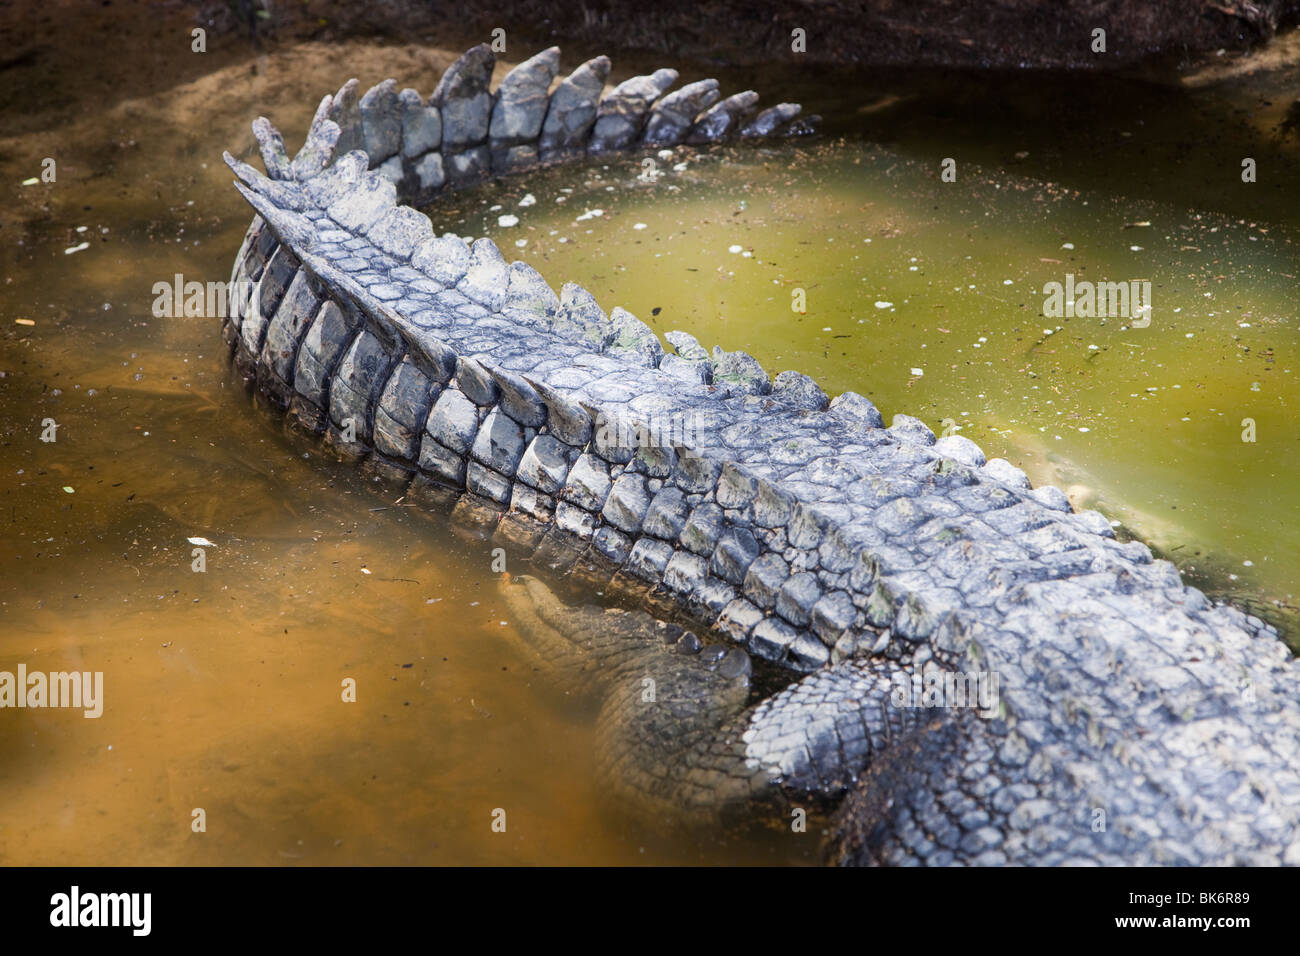 A crocodile at Hartley's crocodile farm near Cairns, Queensland, Australia. Stock Photo